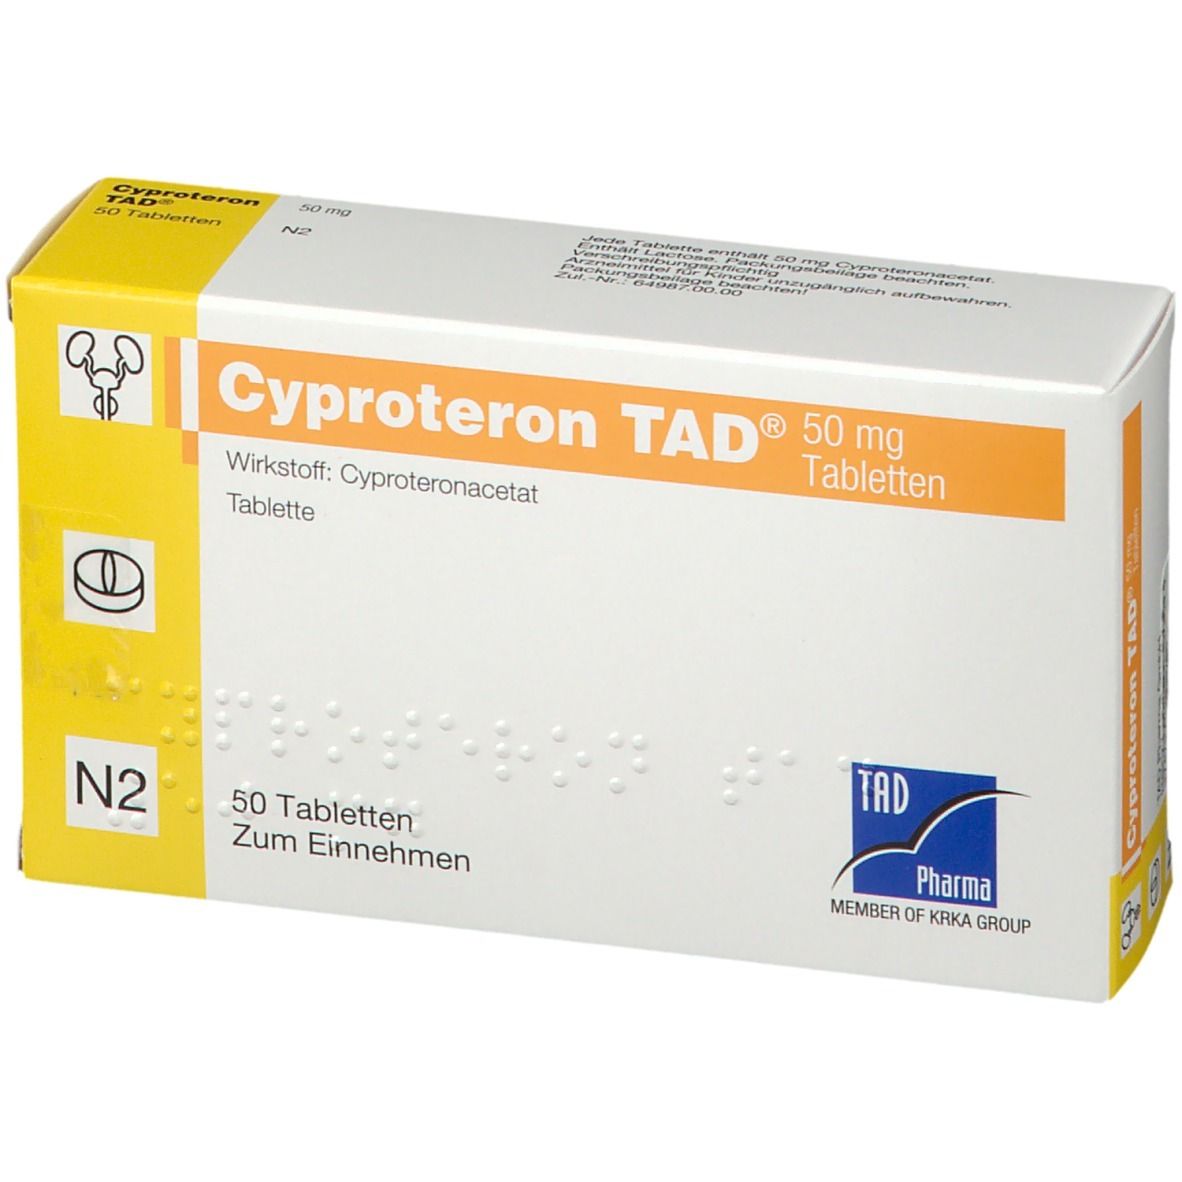 Cyproteron TAD® 50 mg